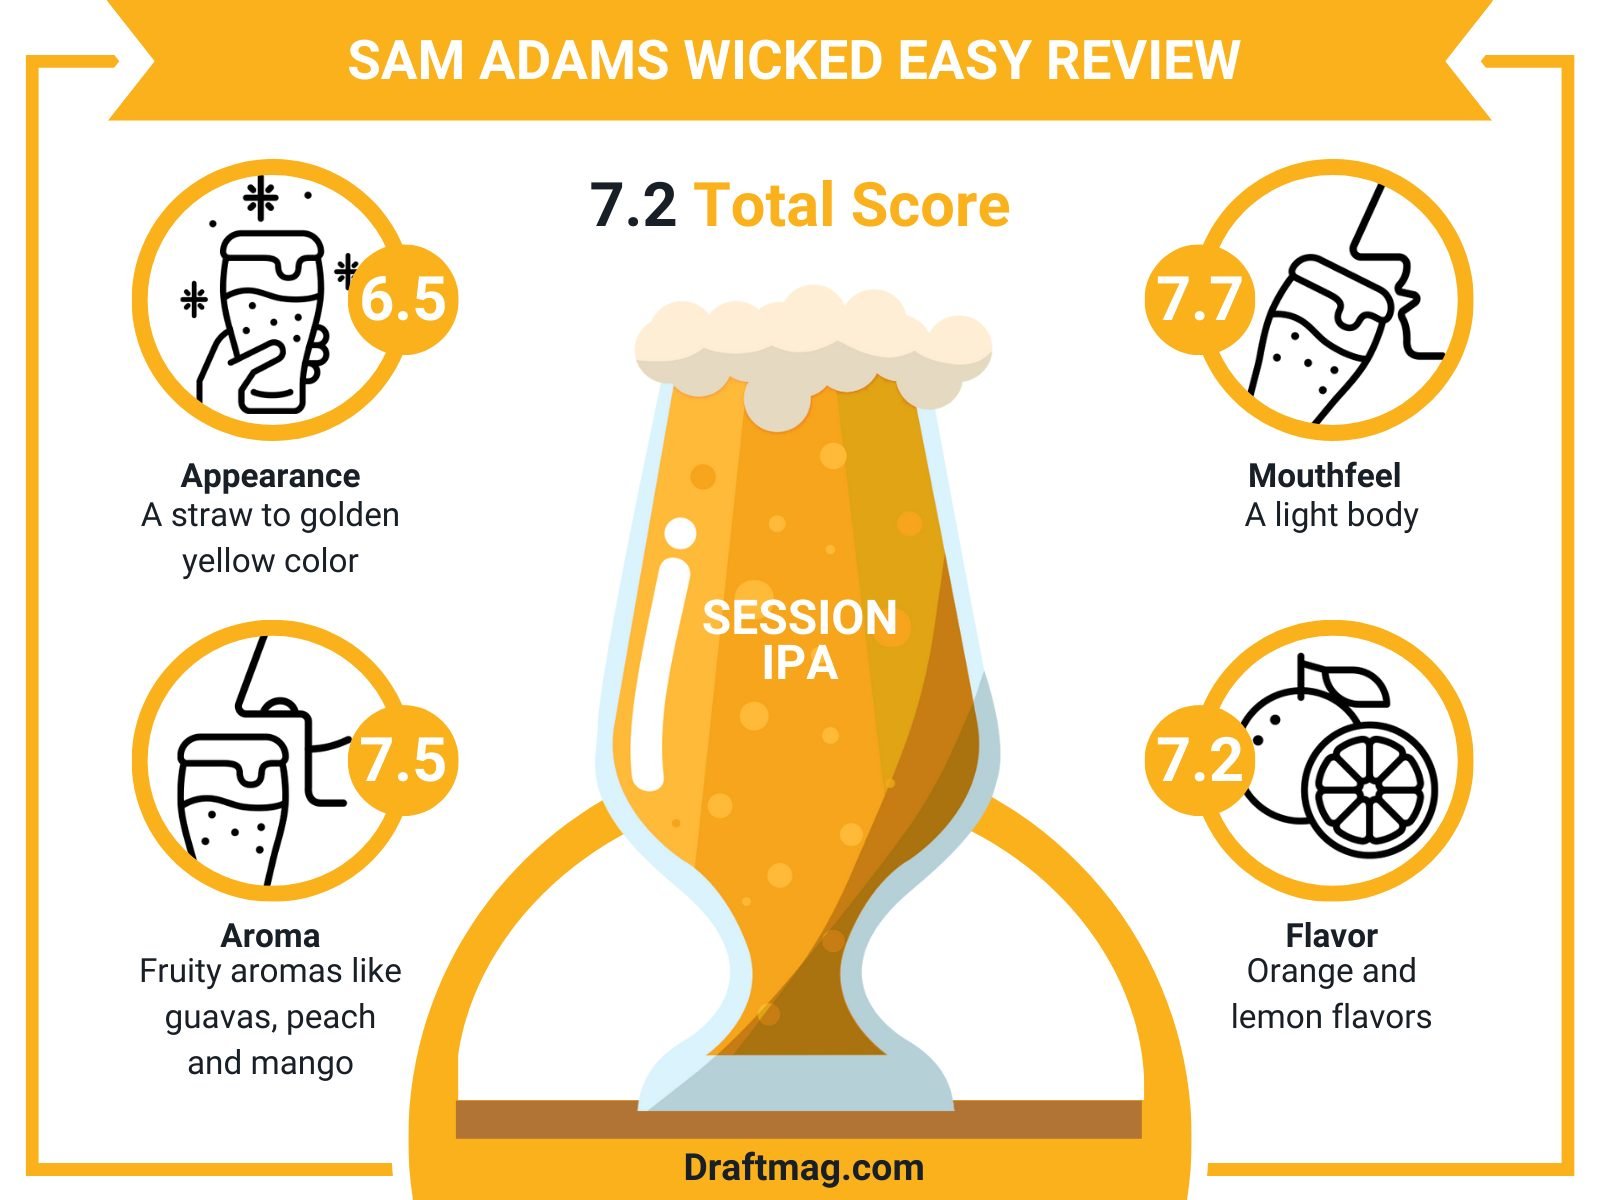 Sam Adams Review Infographic